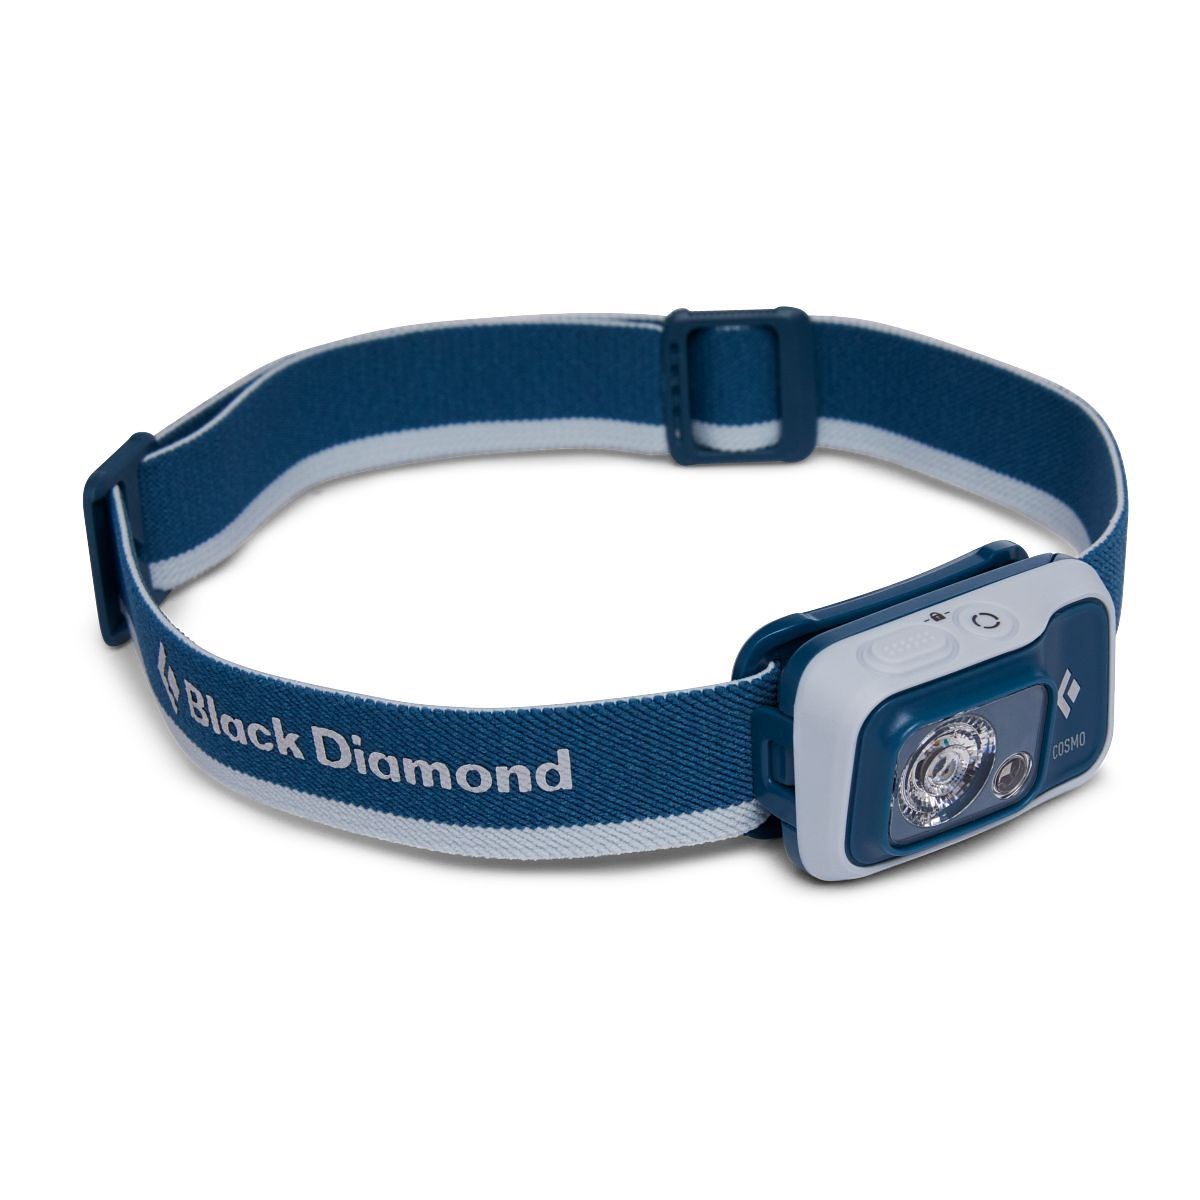 Čelovka Black Diamond Cosmo 350 creek blue Black Diamond 10026860 L-11